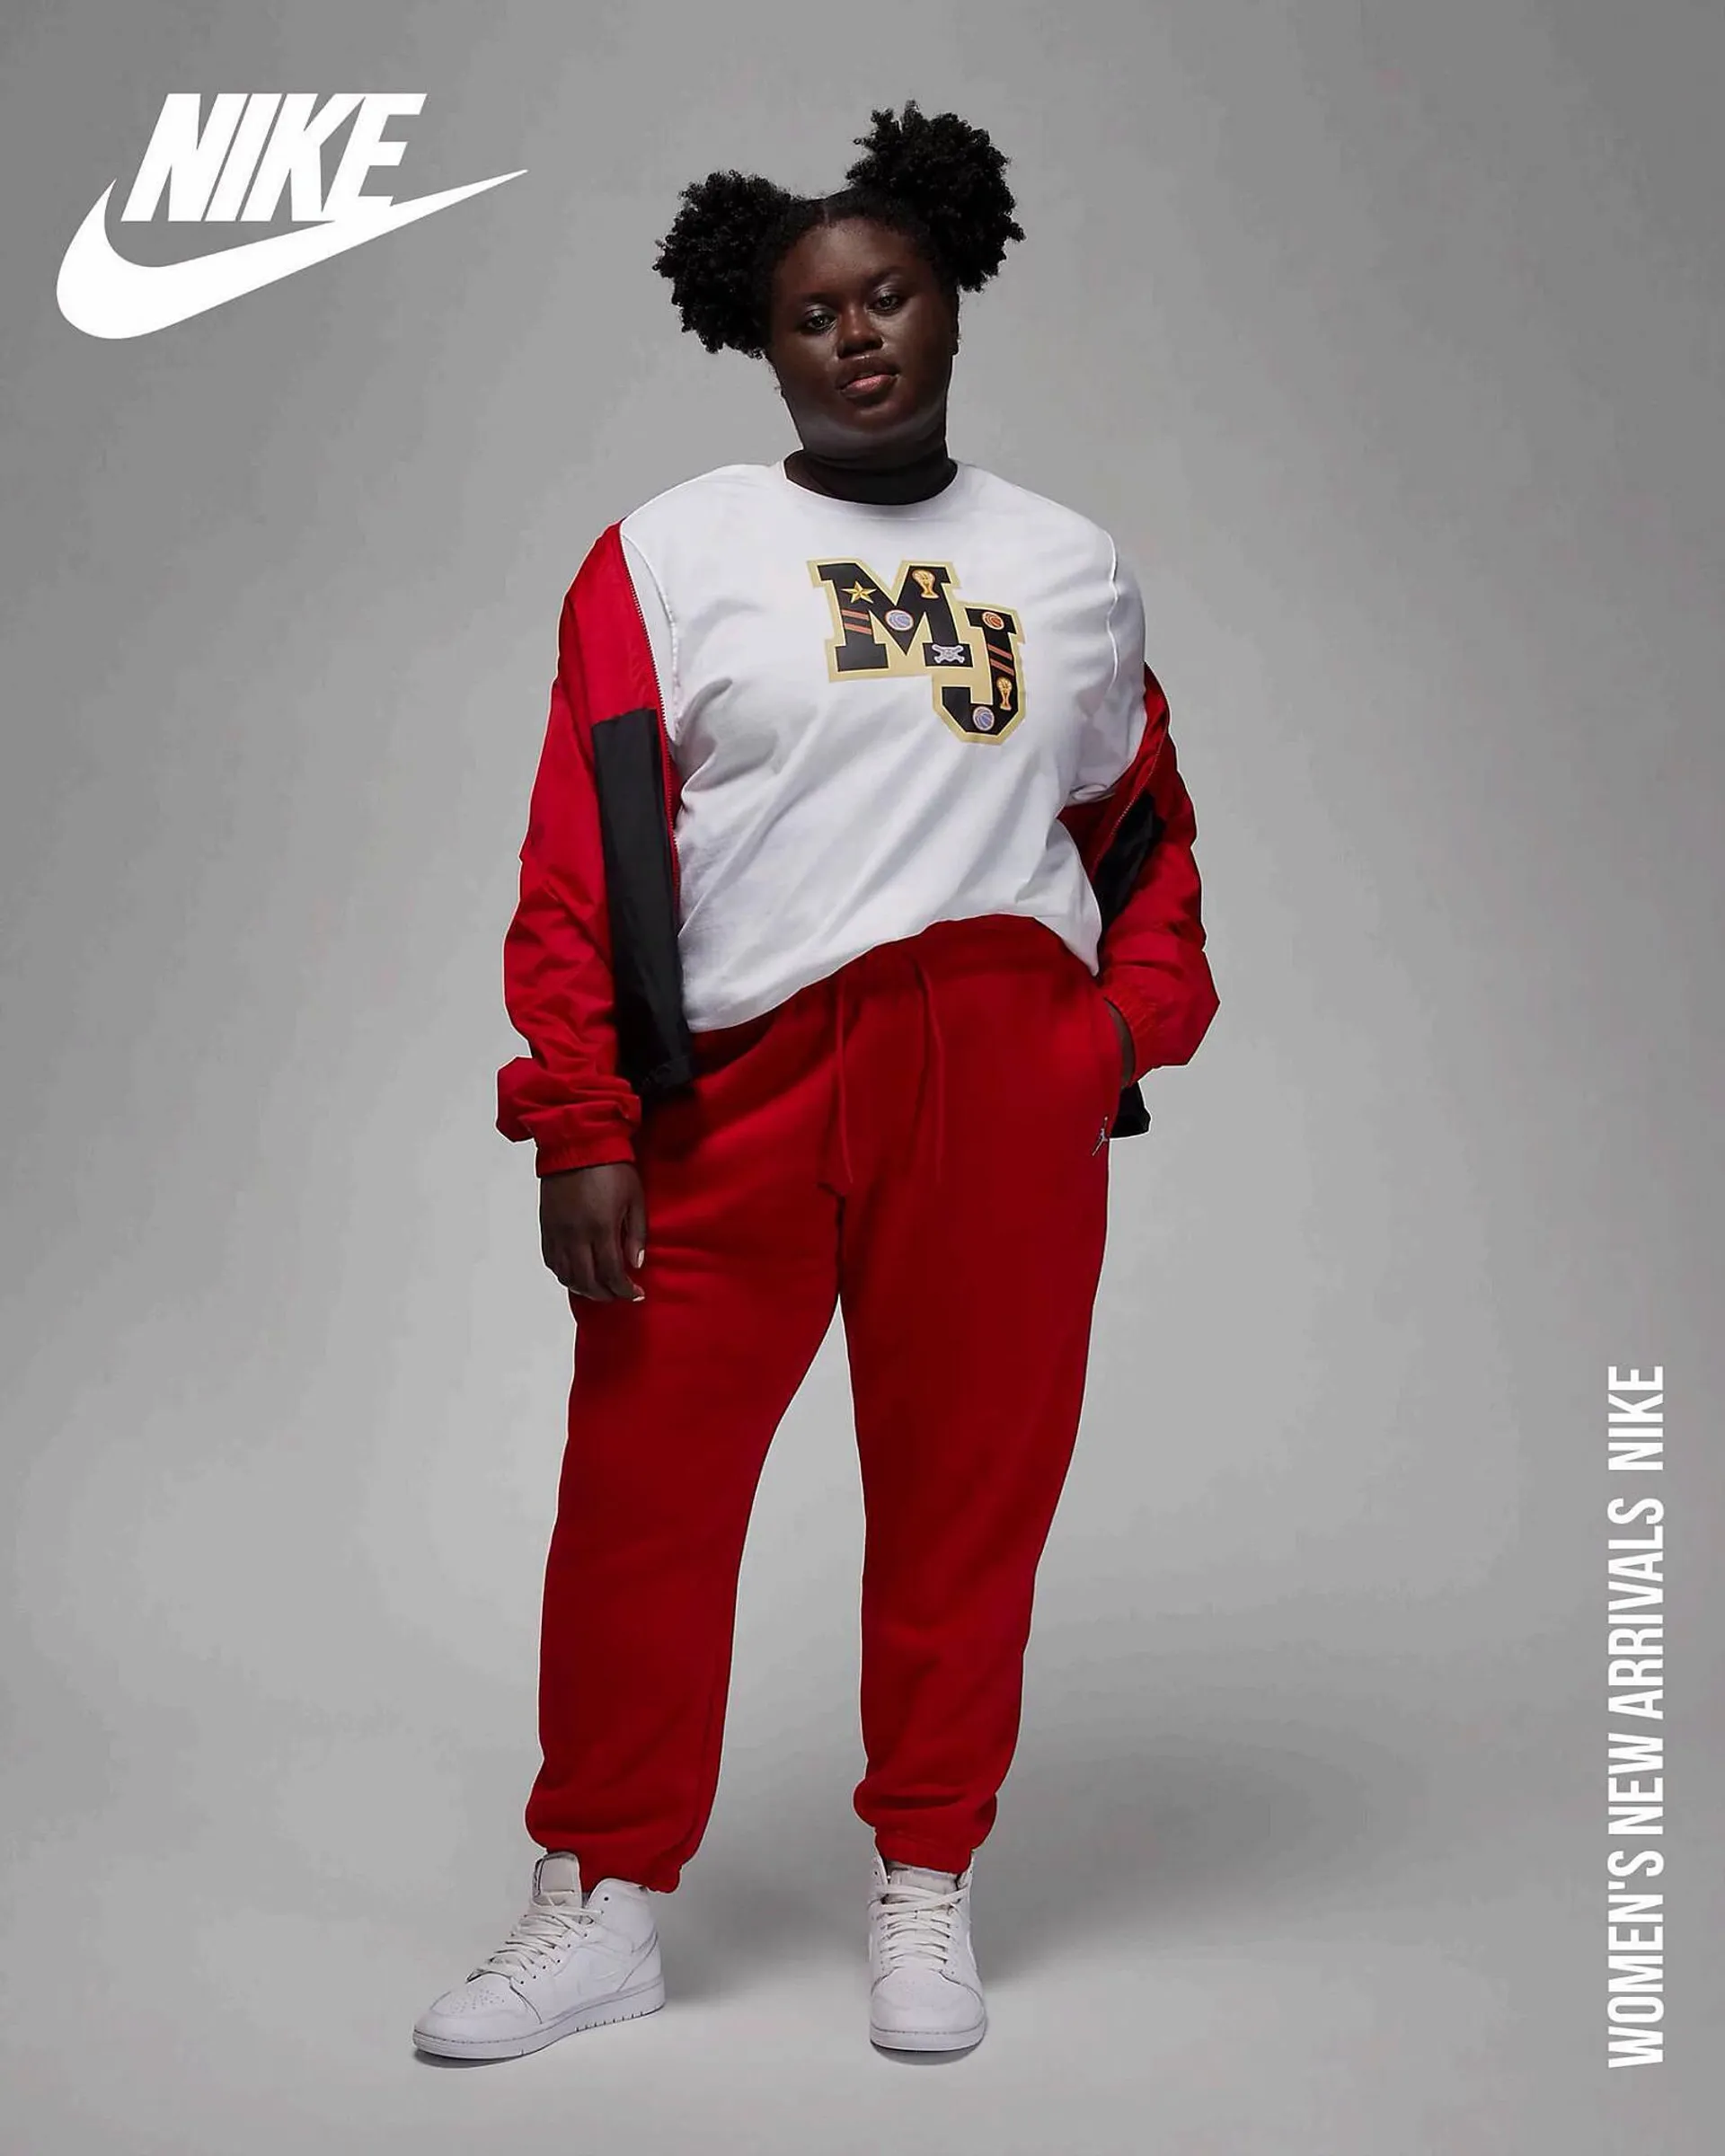 Nike catalogue